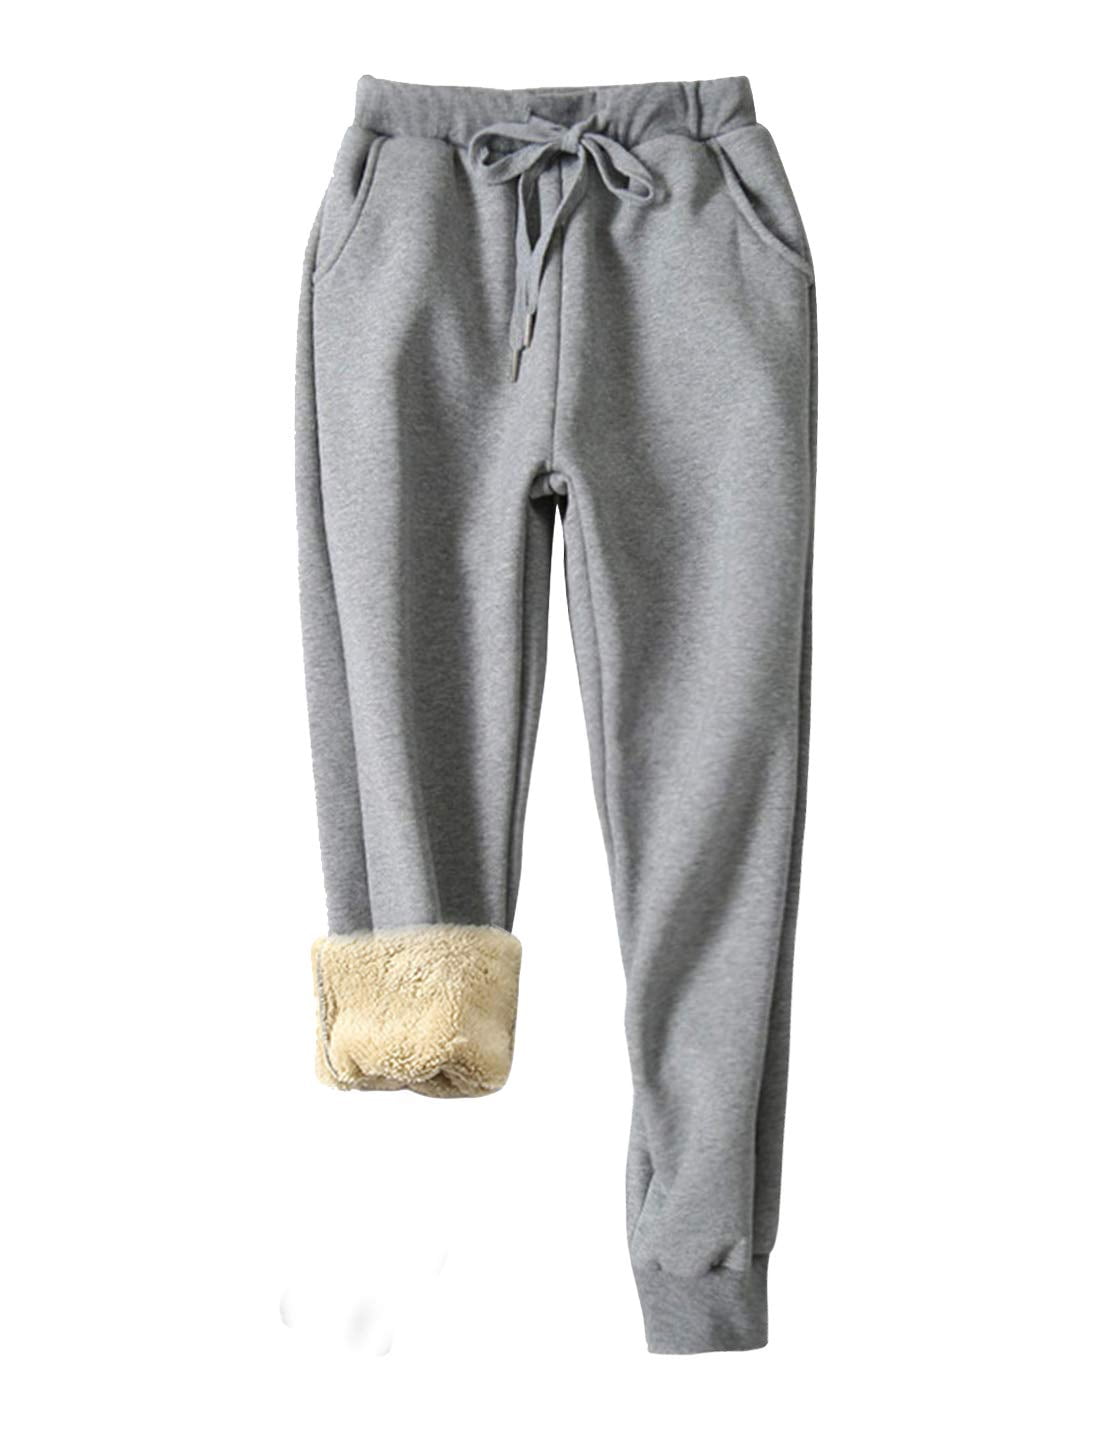 Yyeselk Men's Winter Fleece Pants Sherpa Lined Sweatpants Active